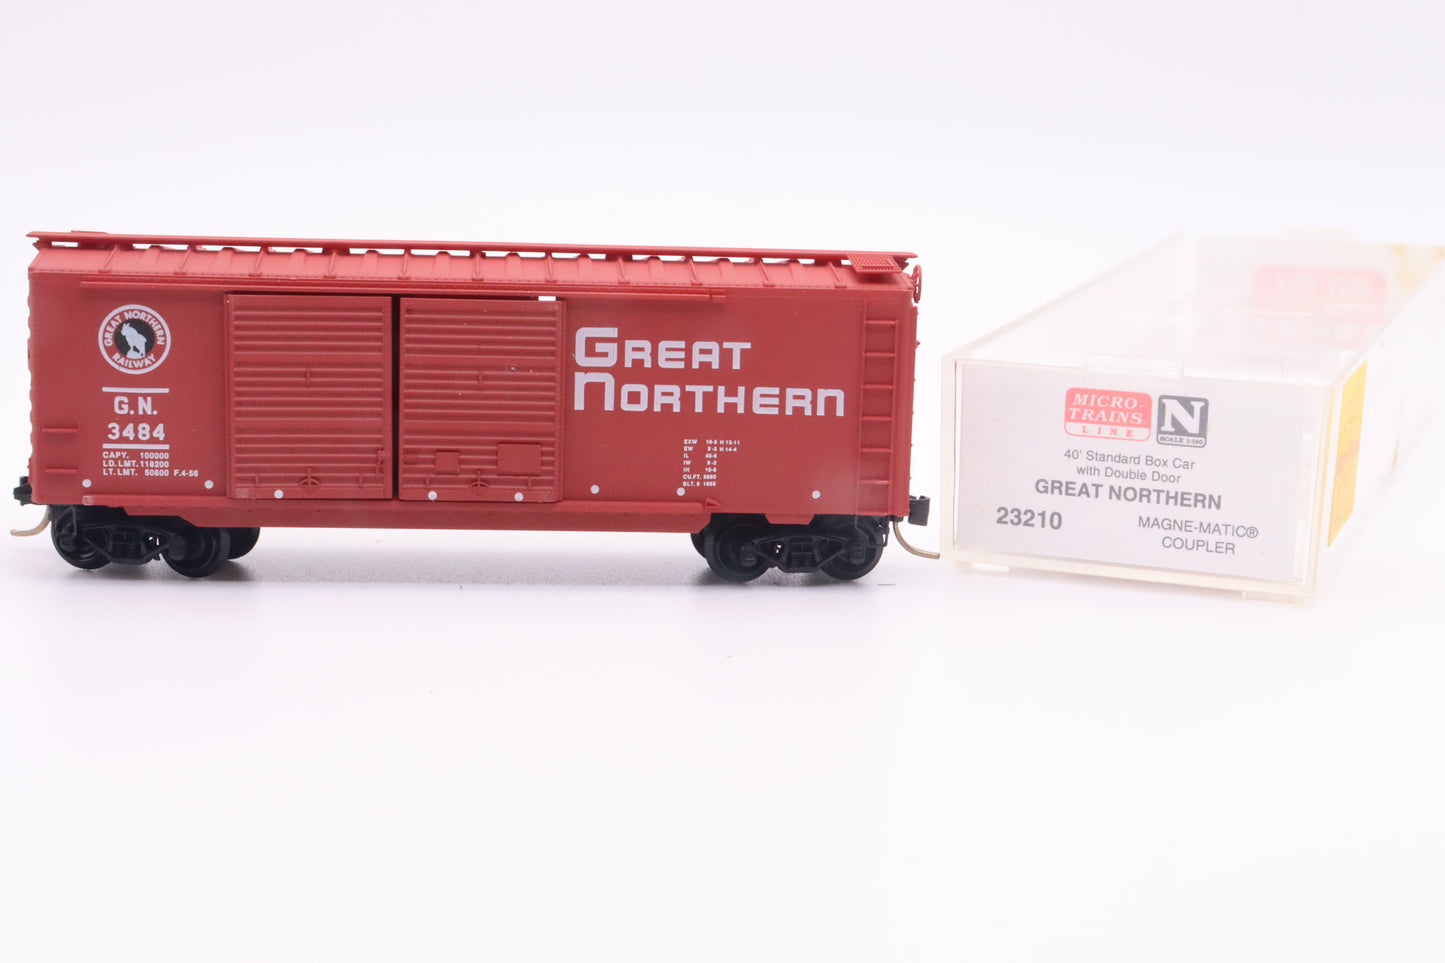 MTL-23210 - 40' Standard Box Car, Double Doors - Great Northern - GN-3484